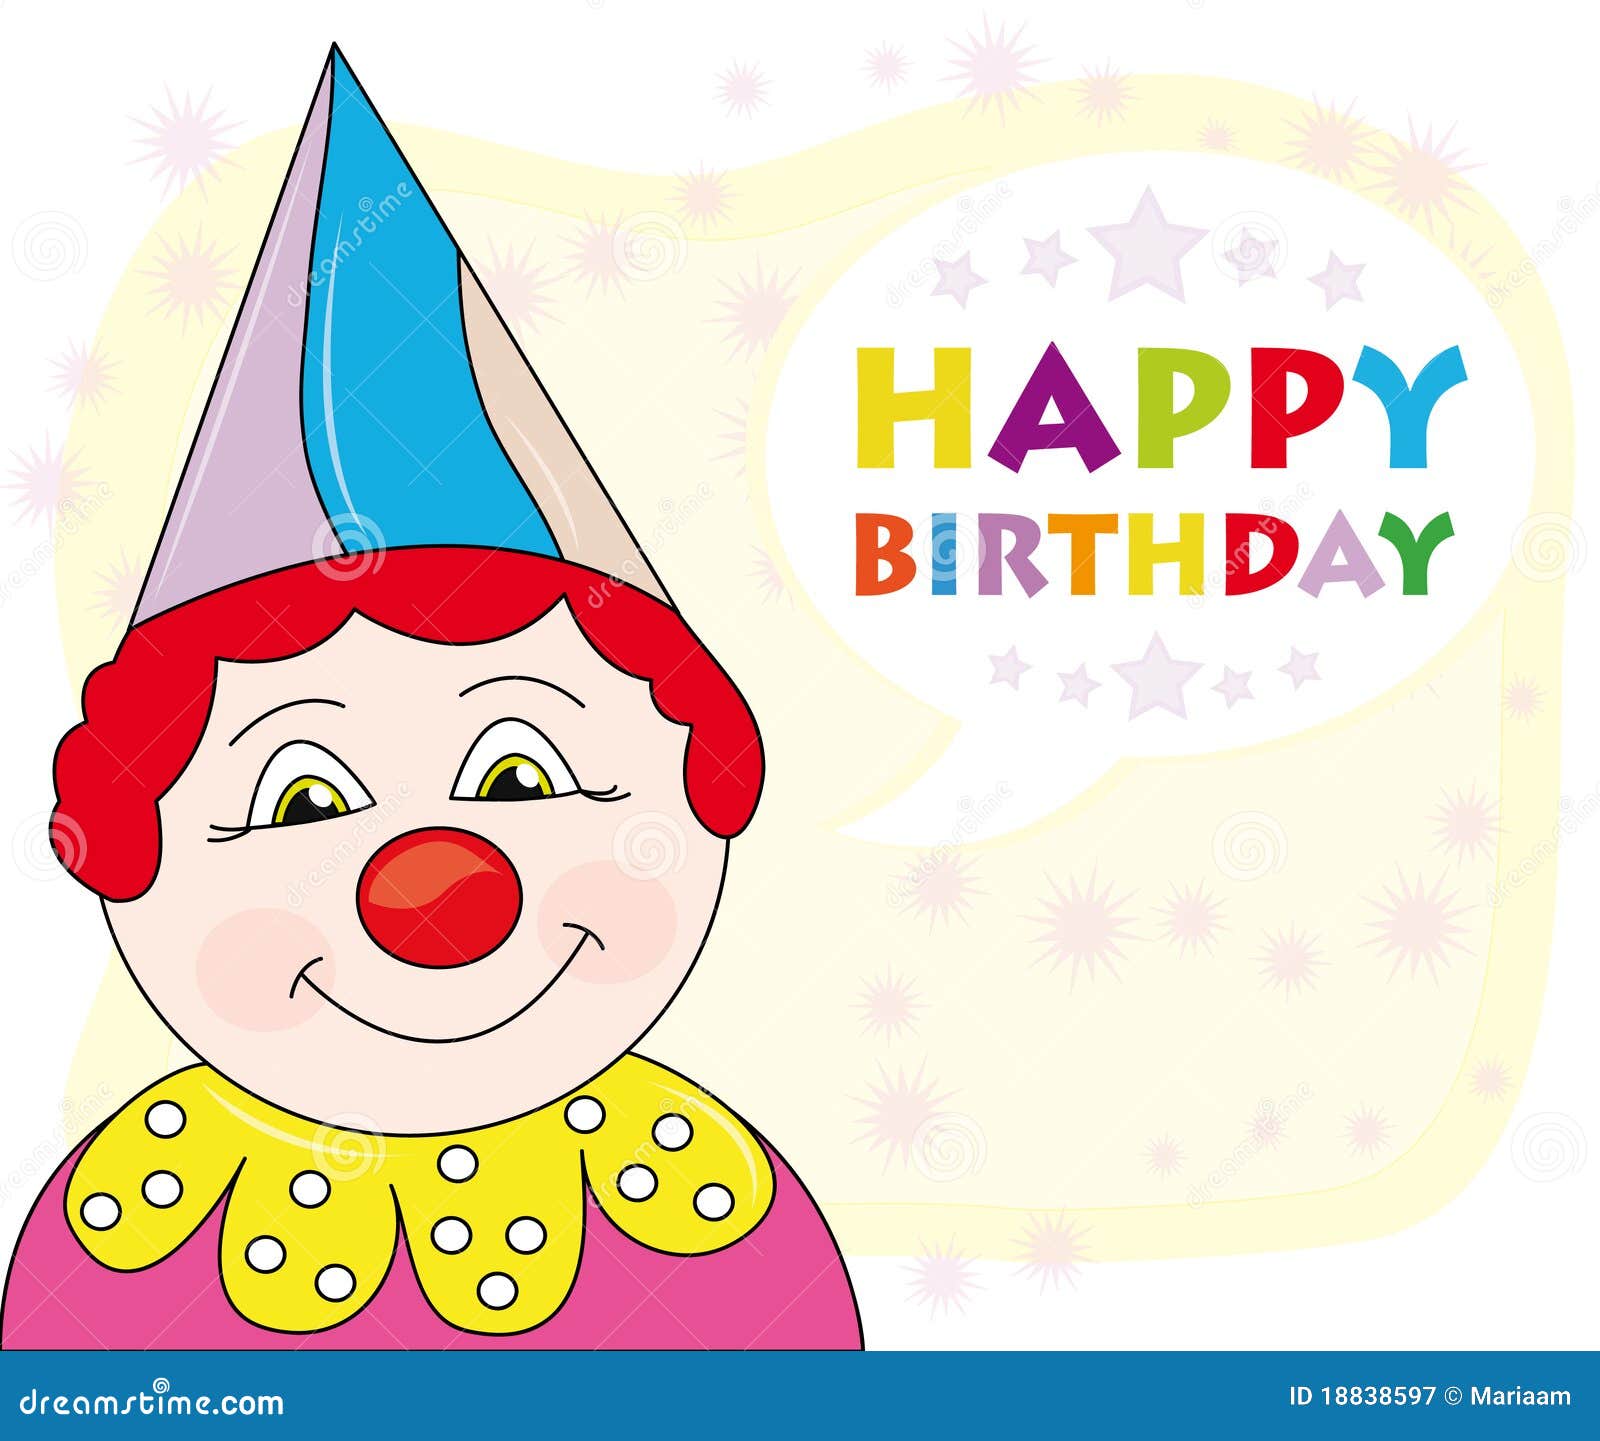 Happy Birthday Greeting Card Stock Illustration - Image 